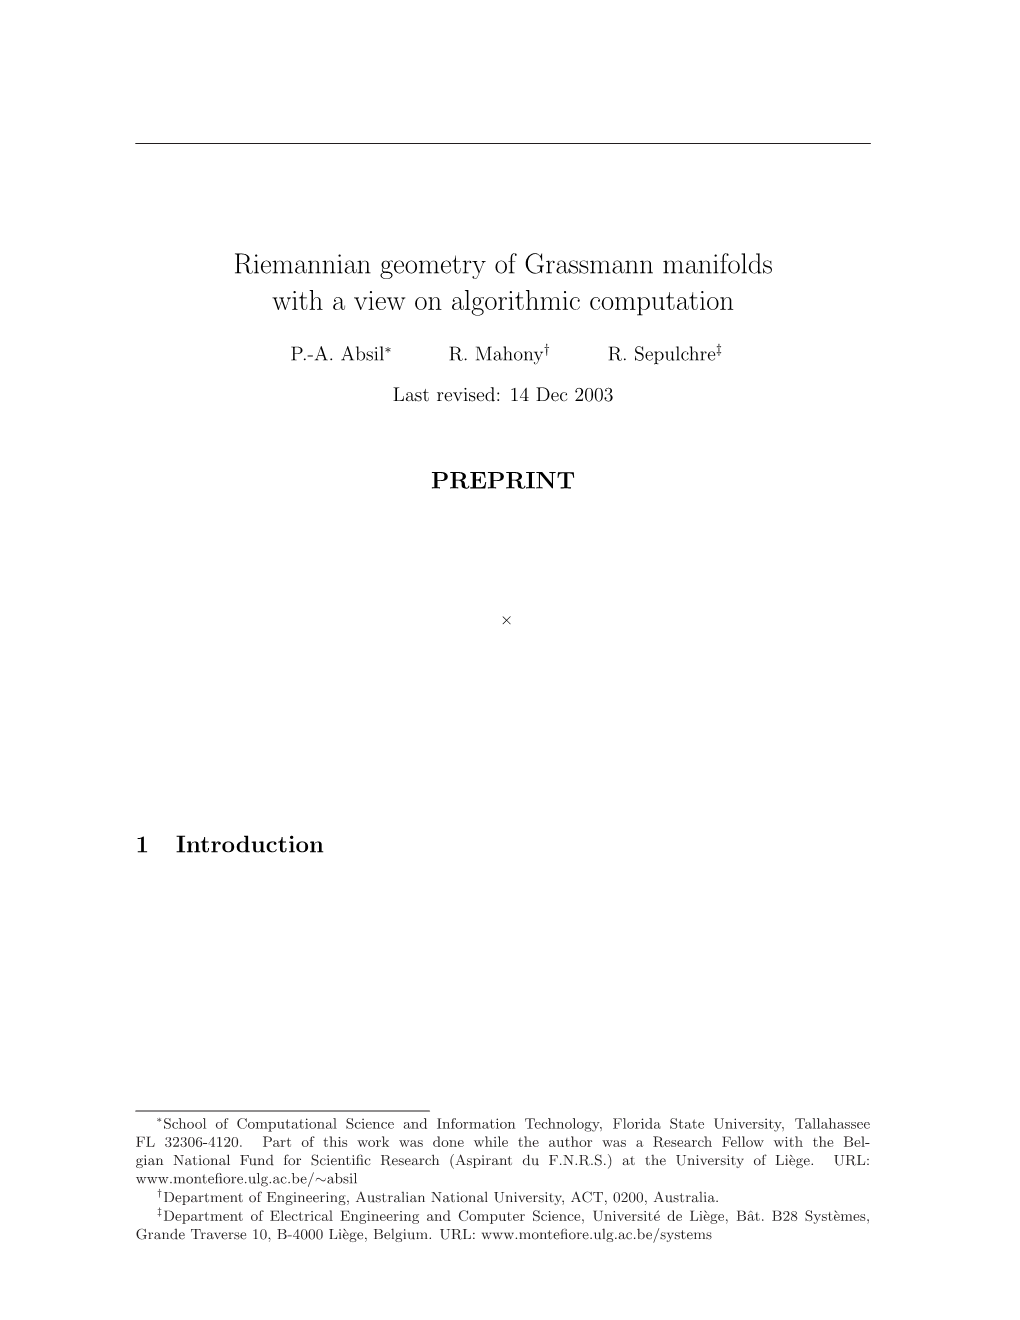 Riemannian Geometry of Grassmann Manifolds with a View on Algorithmic Computation